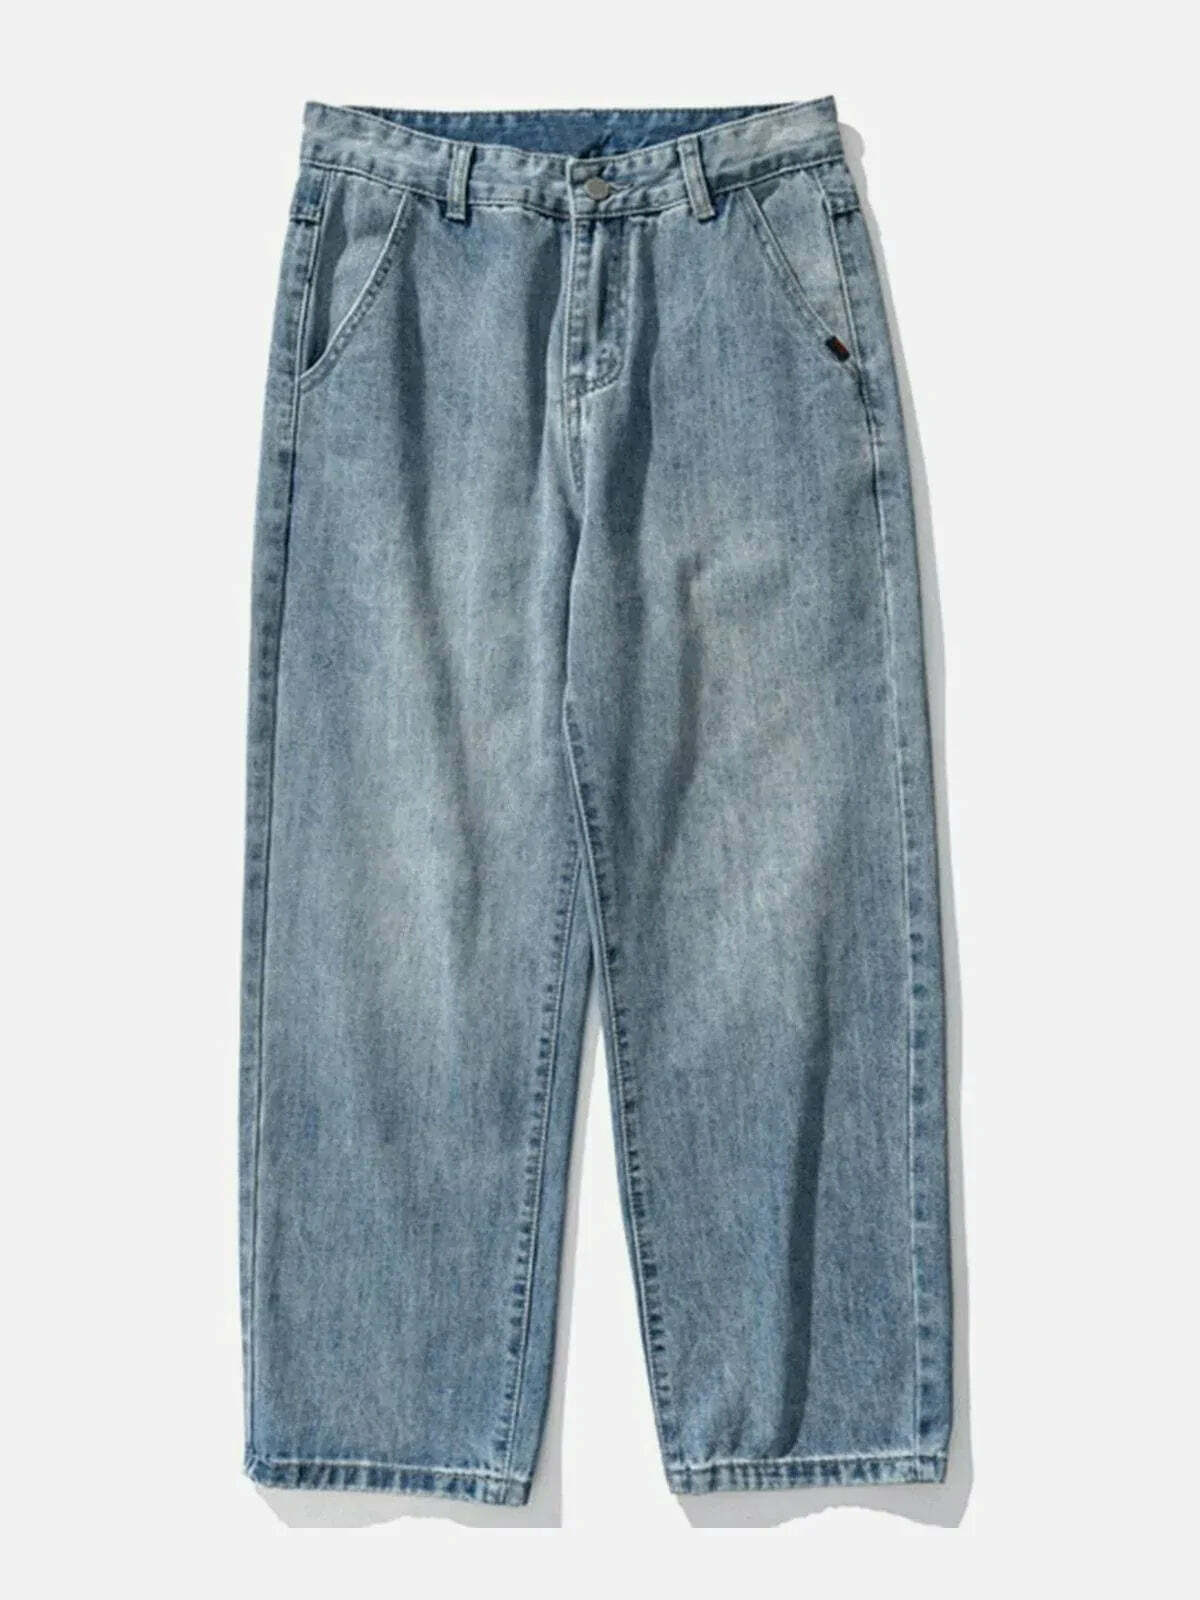 revolutionary washed jeans minimalist & edgy style 8106